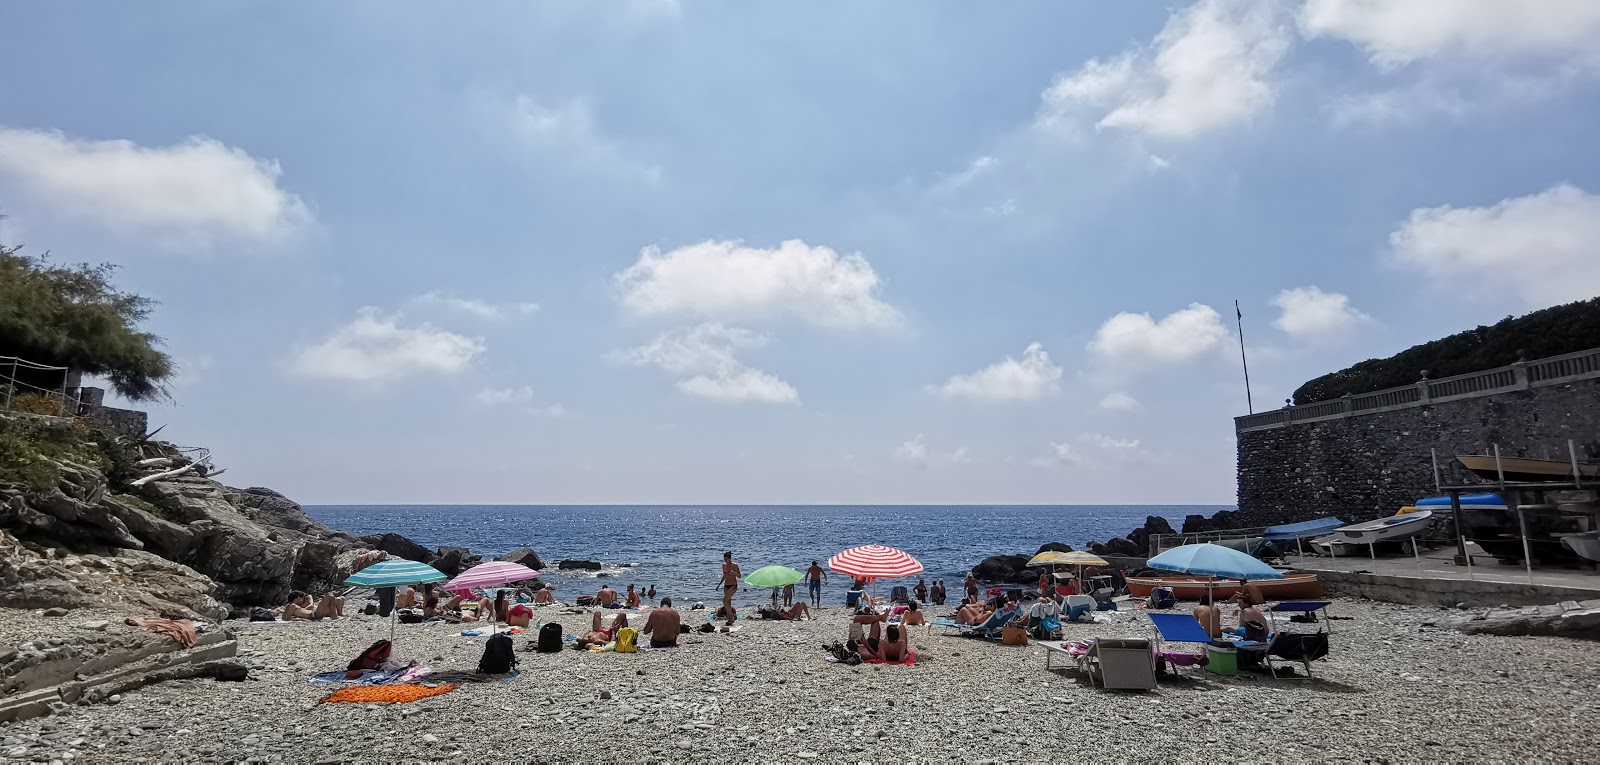 Foto van Spiaggia Murcarolo en de nederzetting